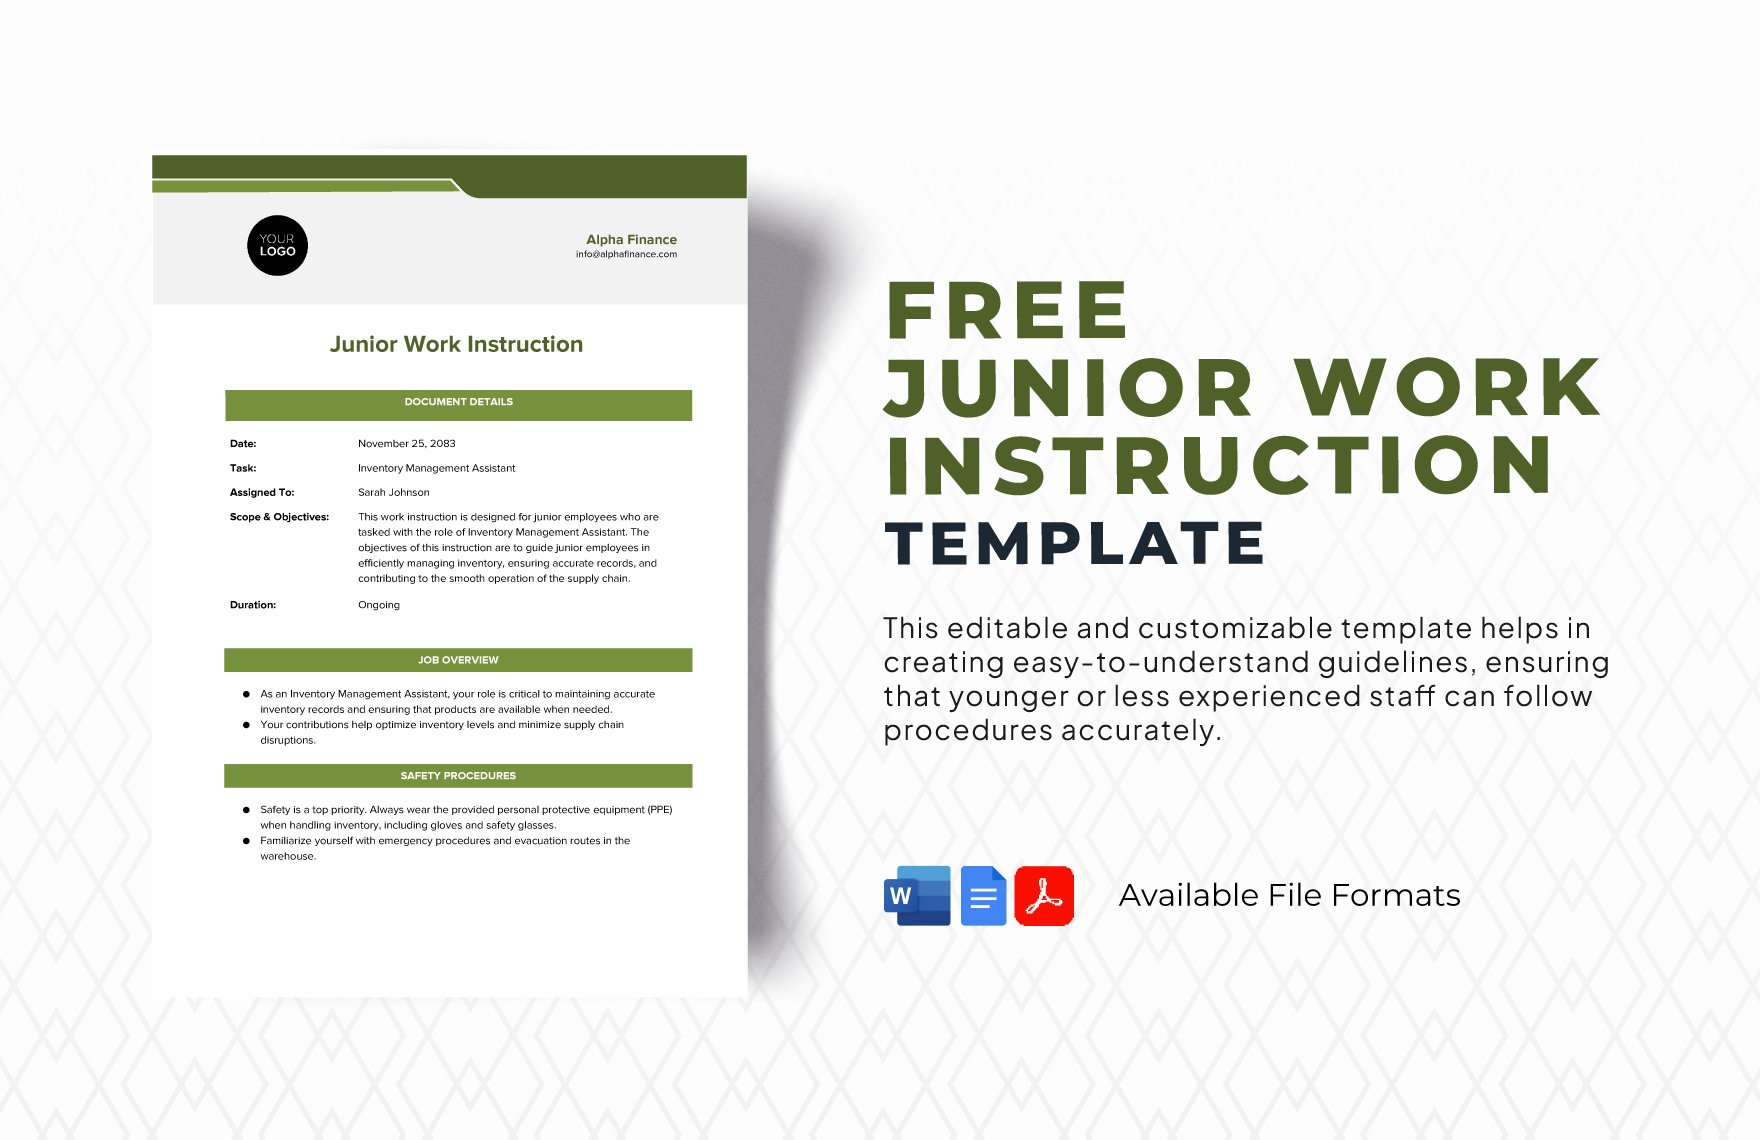 Free Junior Work Instruction Template in Word, Google Docs, PDF